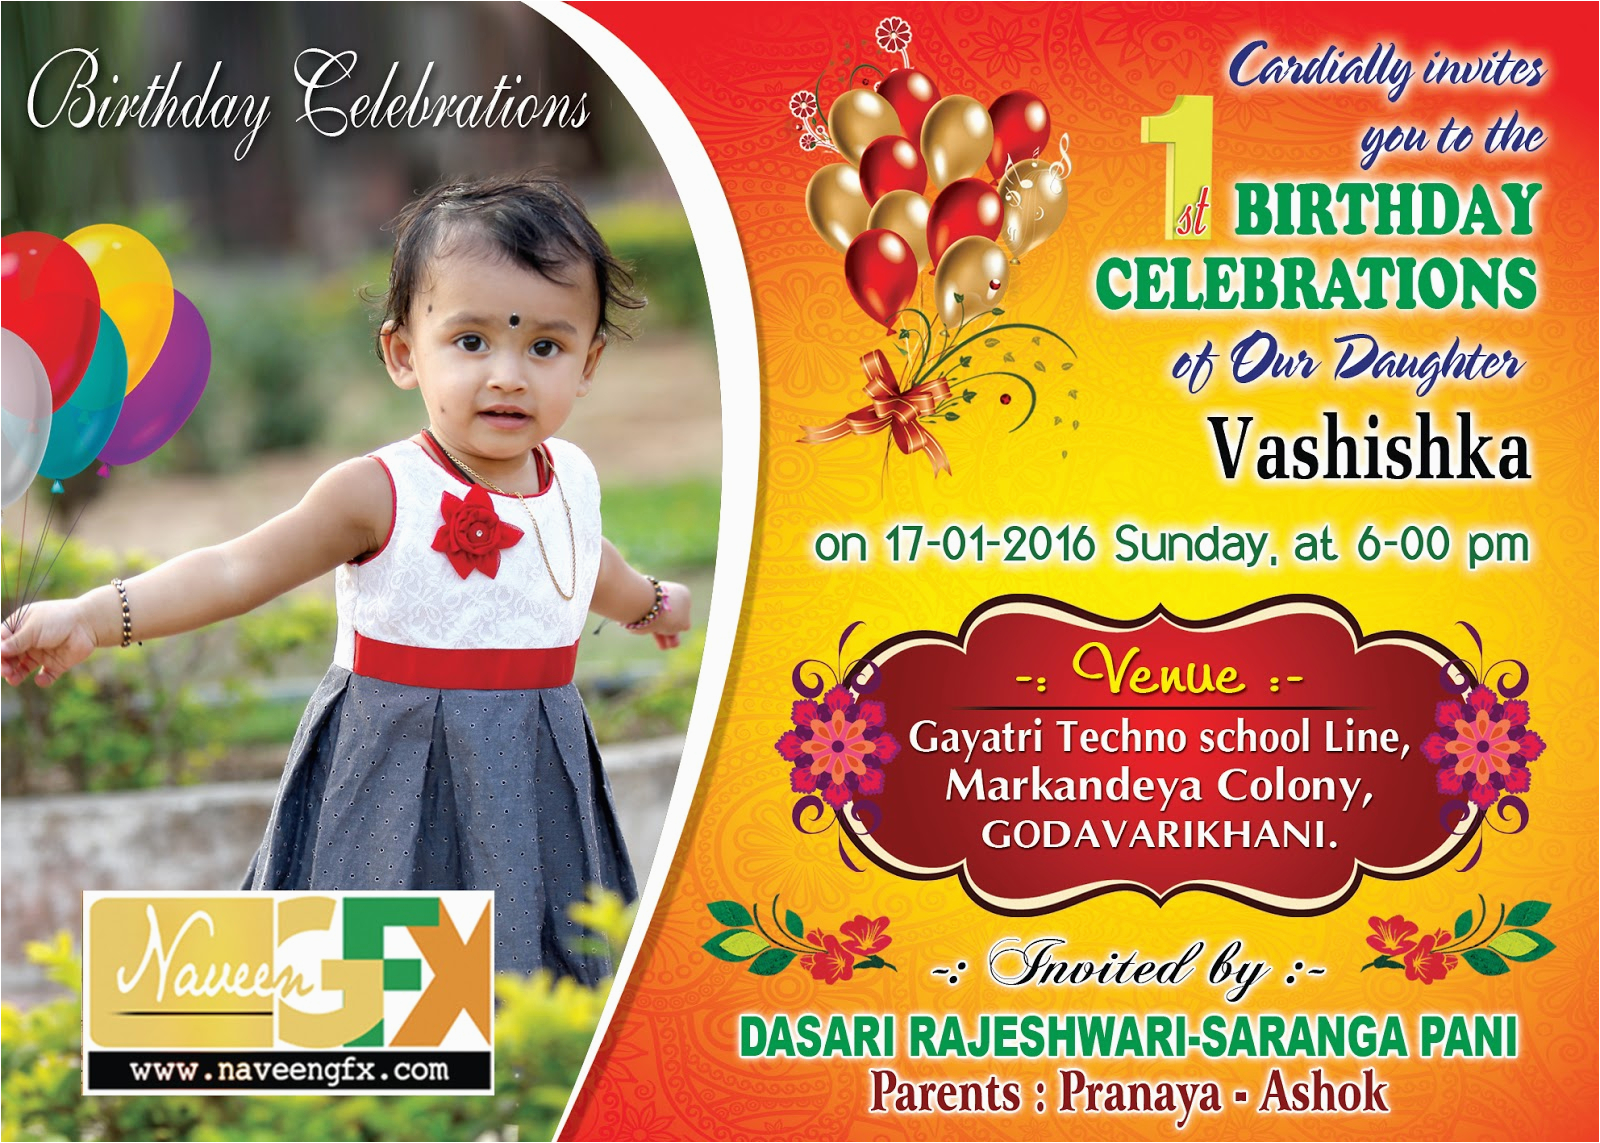 Customized Birthday Invitation Cards Online Free Sample Birthday Invitations Cards Psd Templates Free